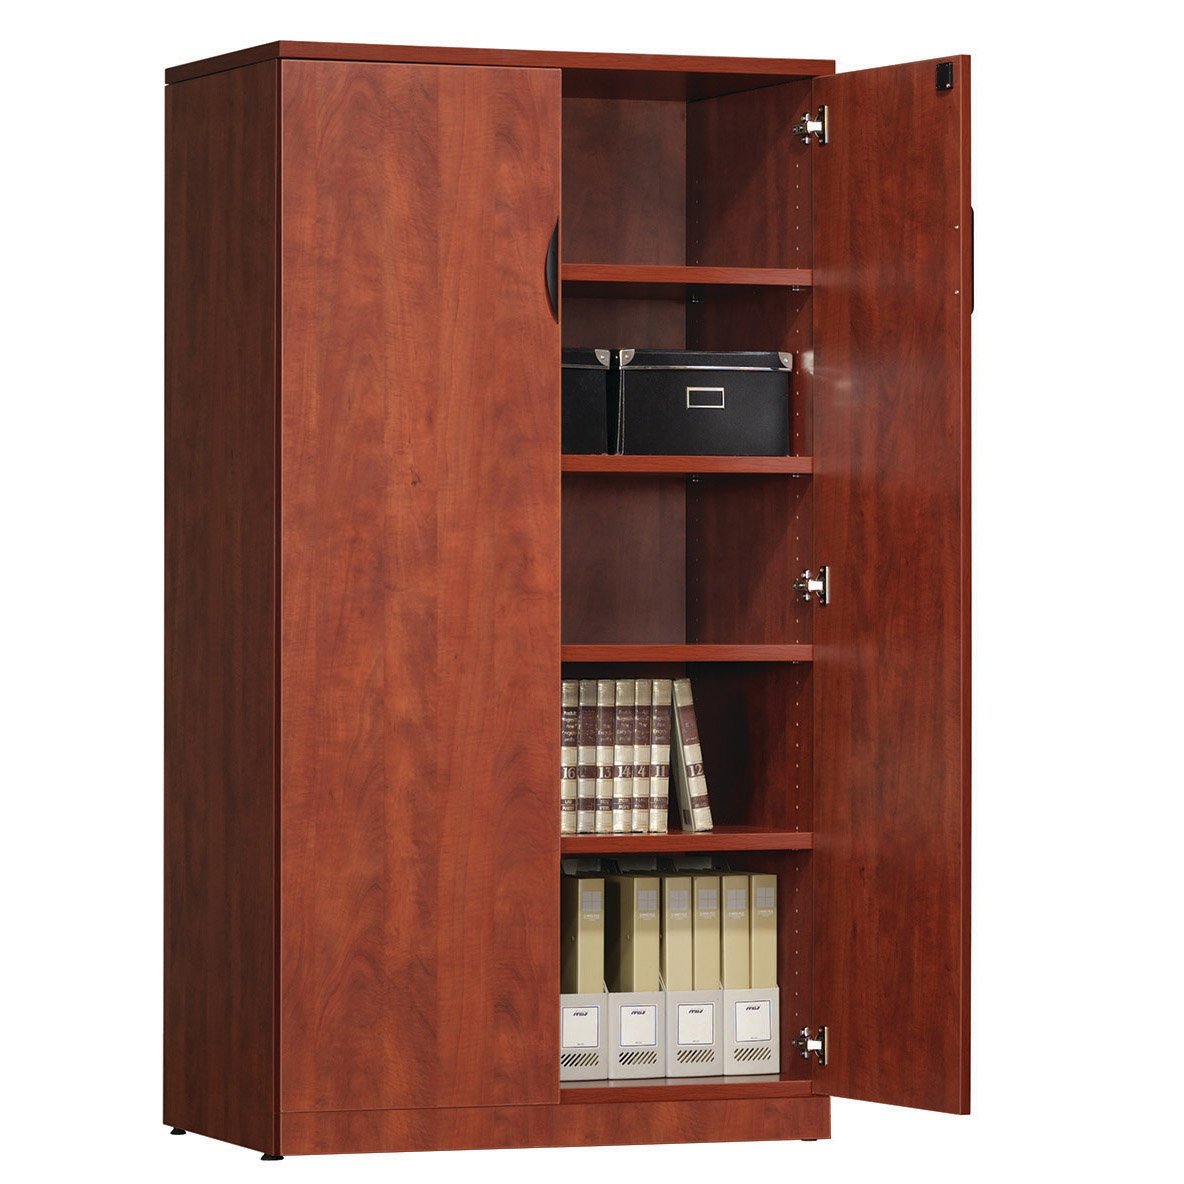 Storage cabinet with 3 adjustable shelves